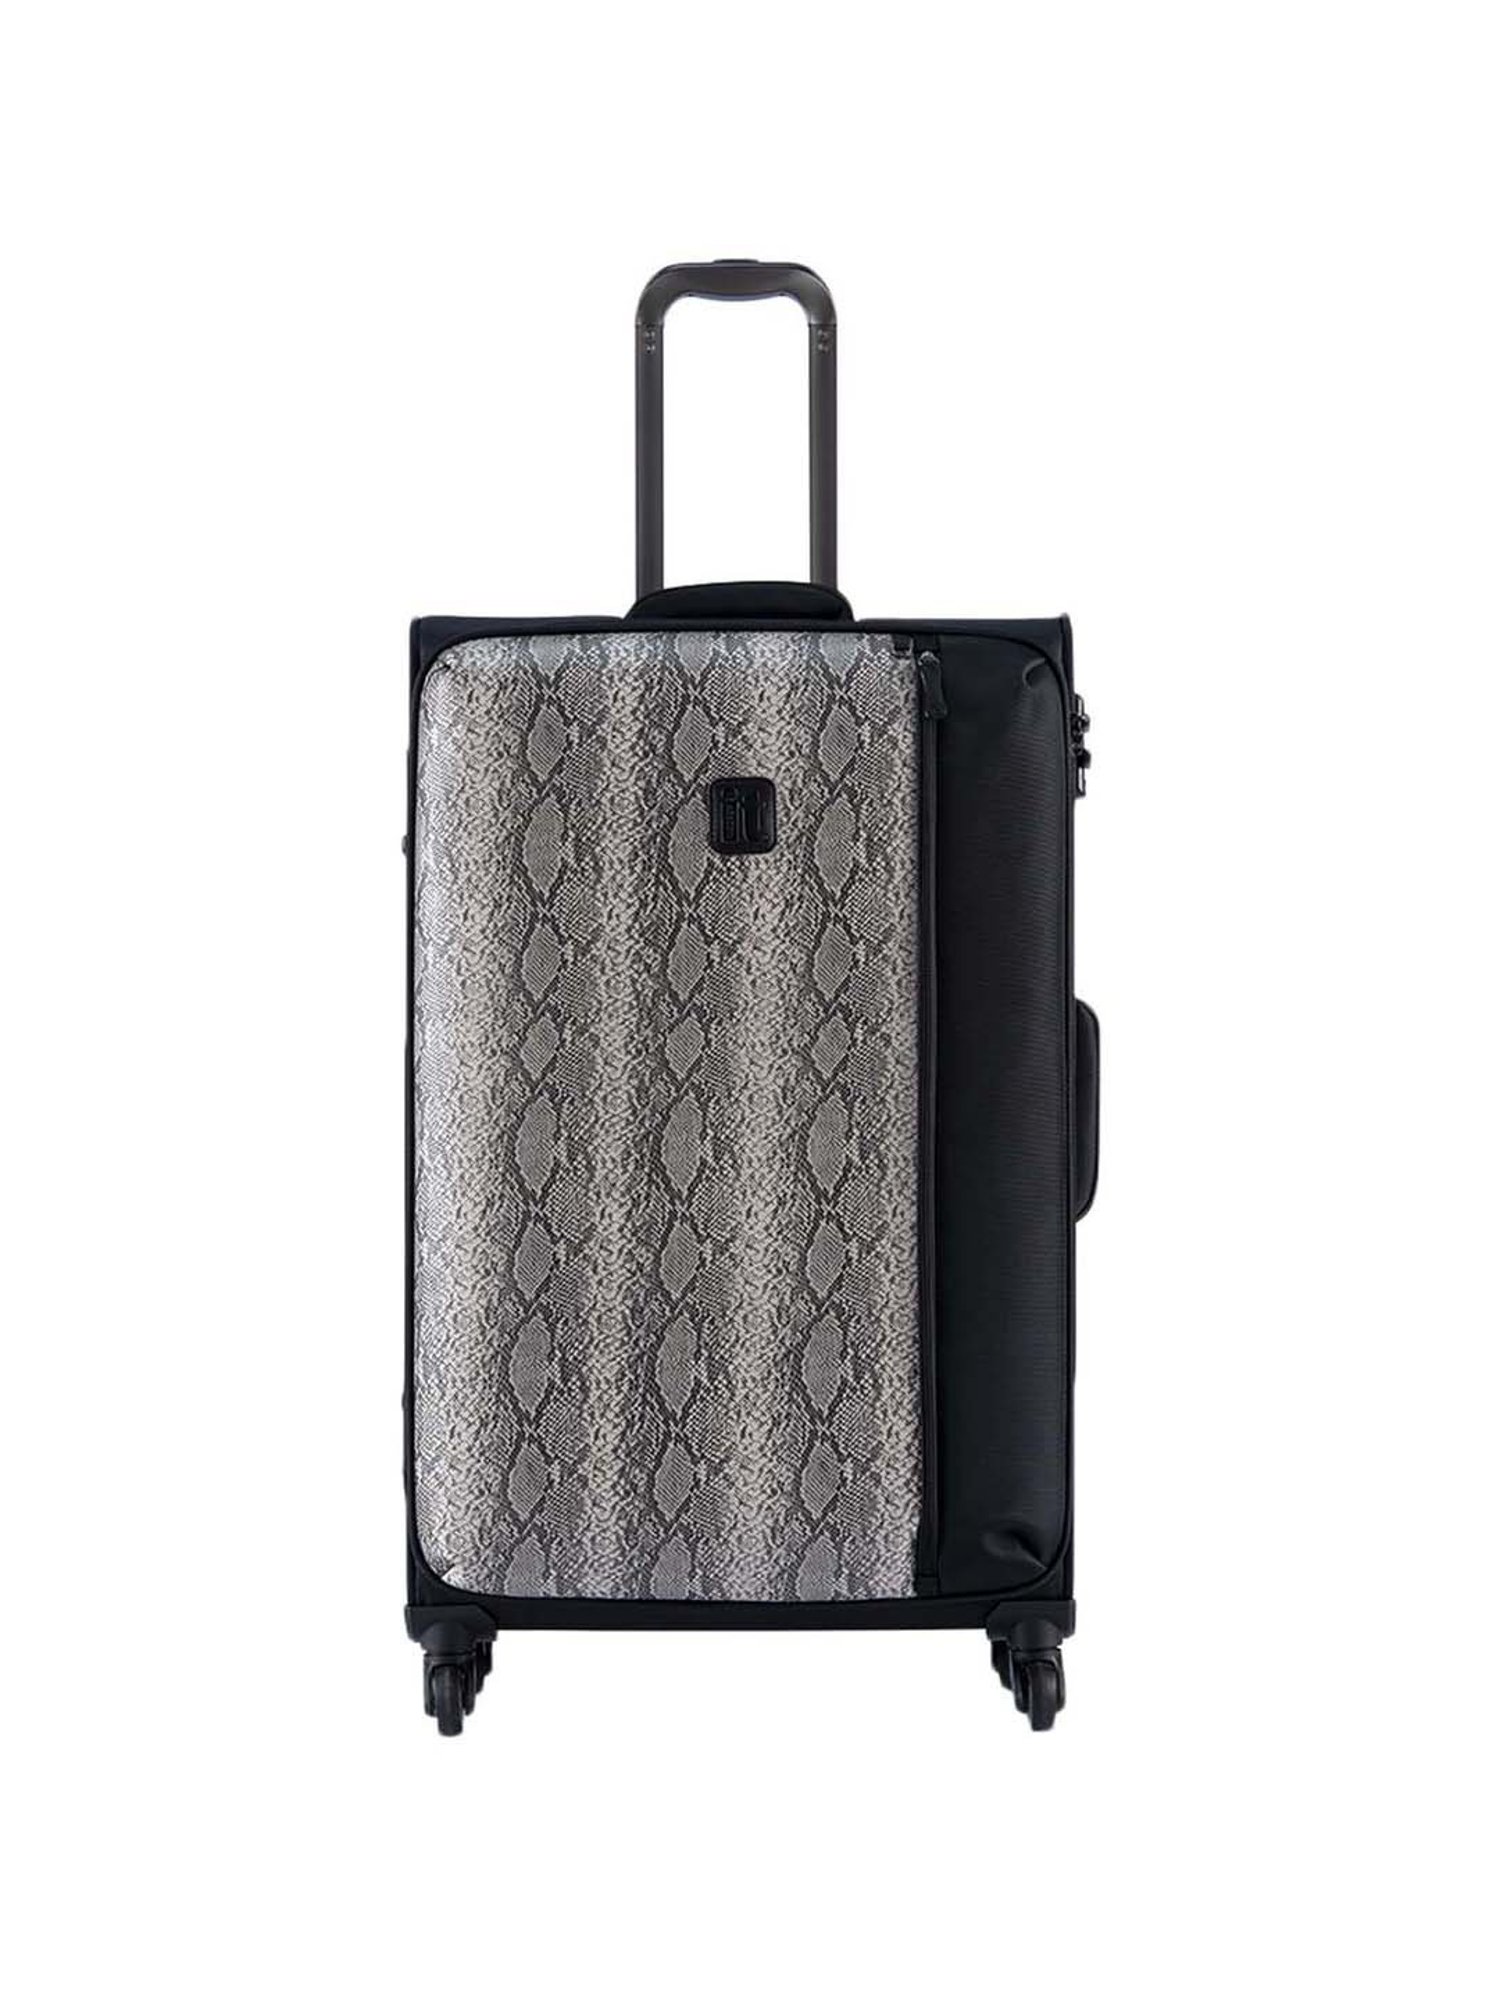 DKNY Trademark 25 | Hardside luggage, Dkny, Luggage